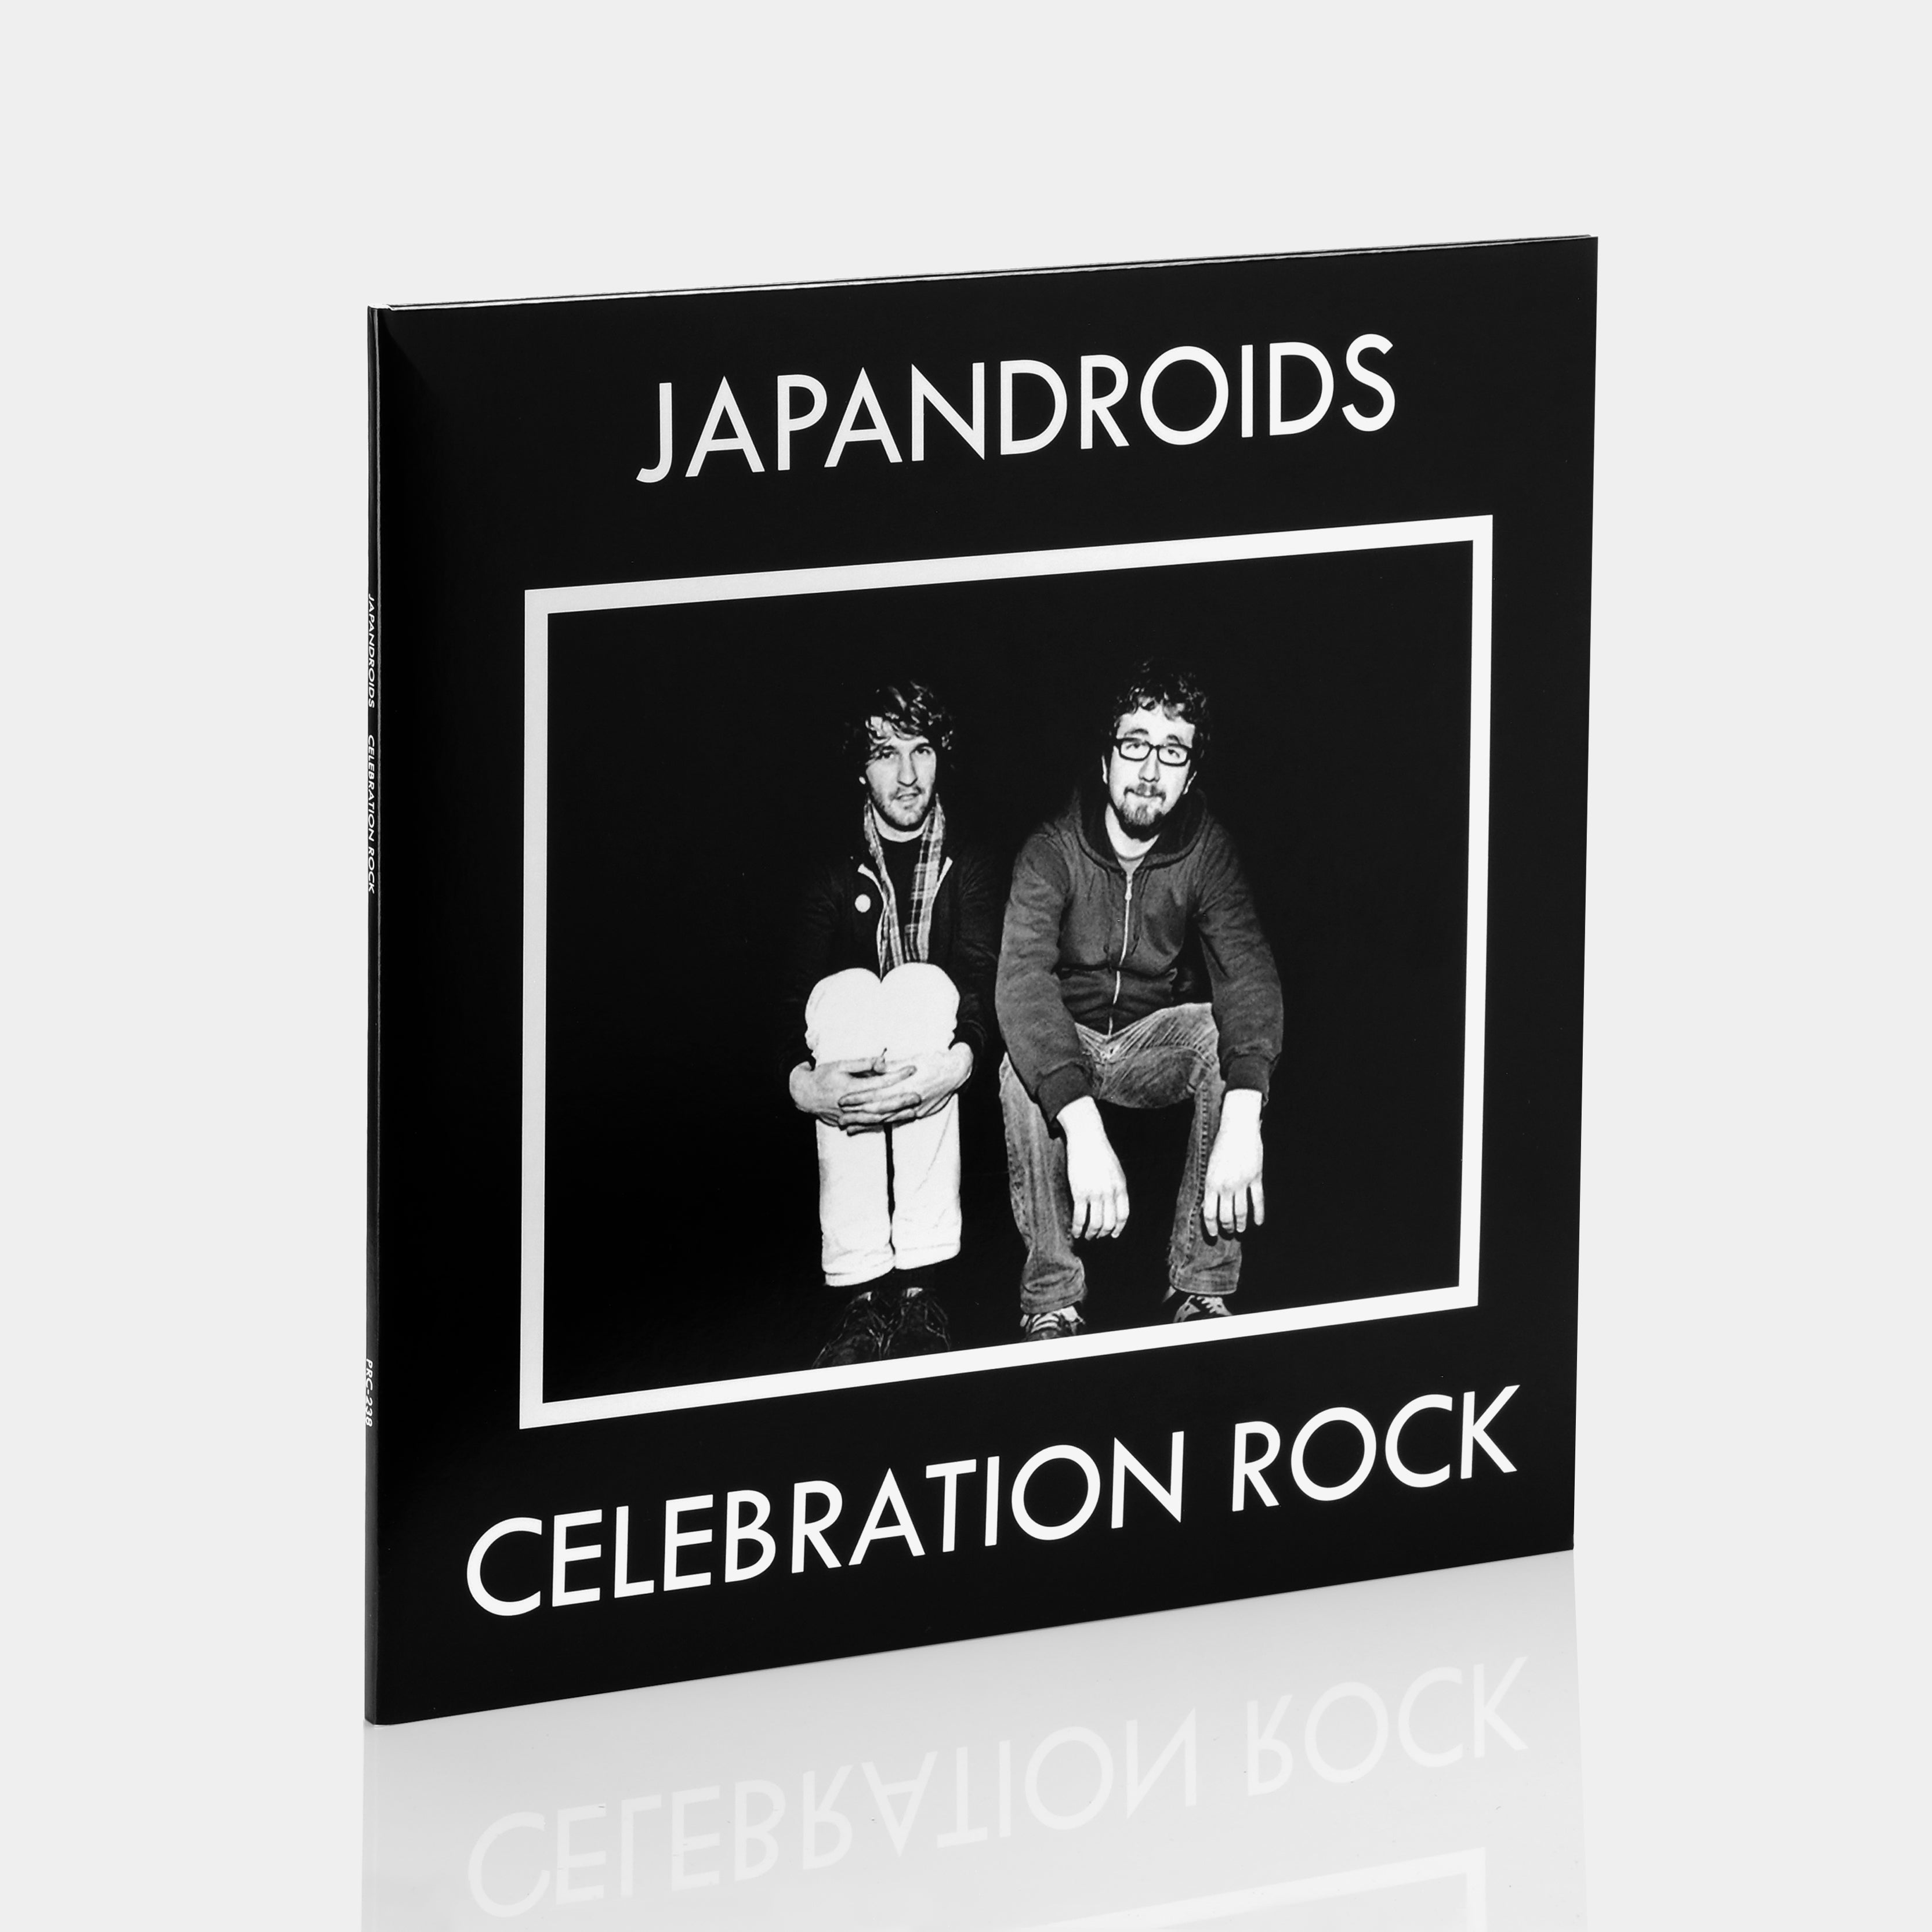 Japandroids - Celebration Rock LP Black And White Mix Vinyl Record